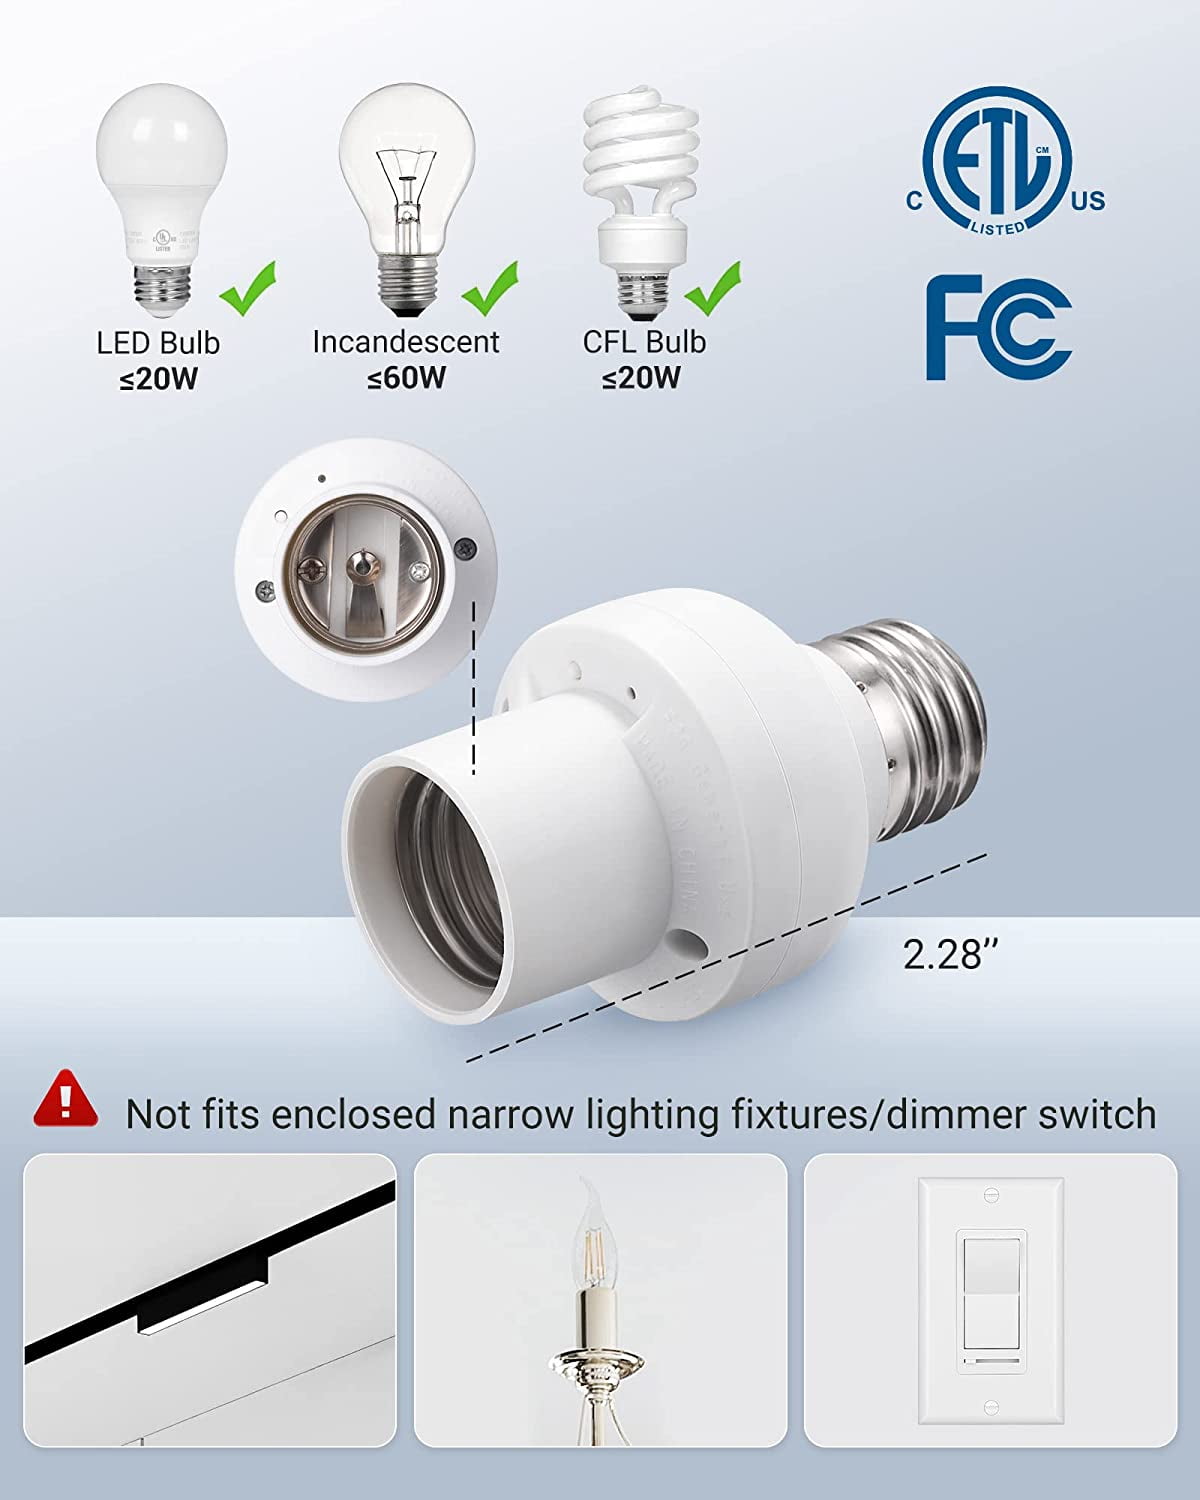 DEWENWILS Remote Control Light Socket, 110V 120V 125V Wireless Remote Light Bulbs Switch, 100 ft RF Range, for Pull Chain Light Fixture